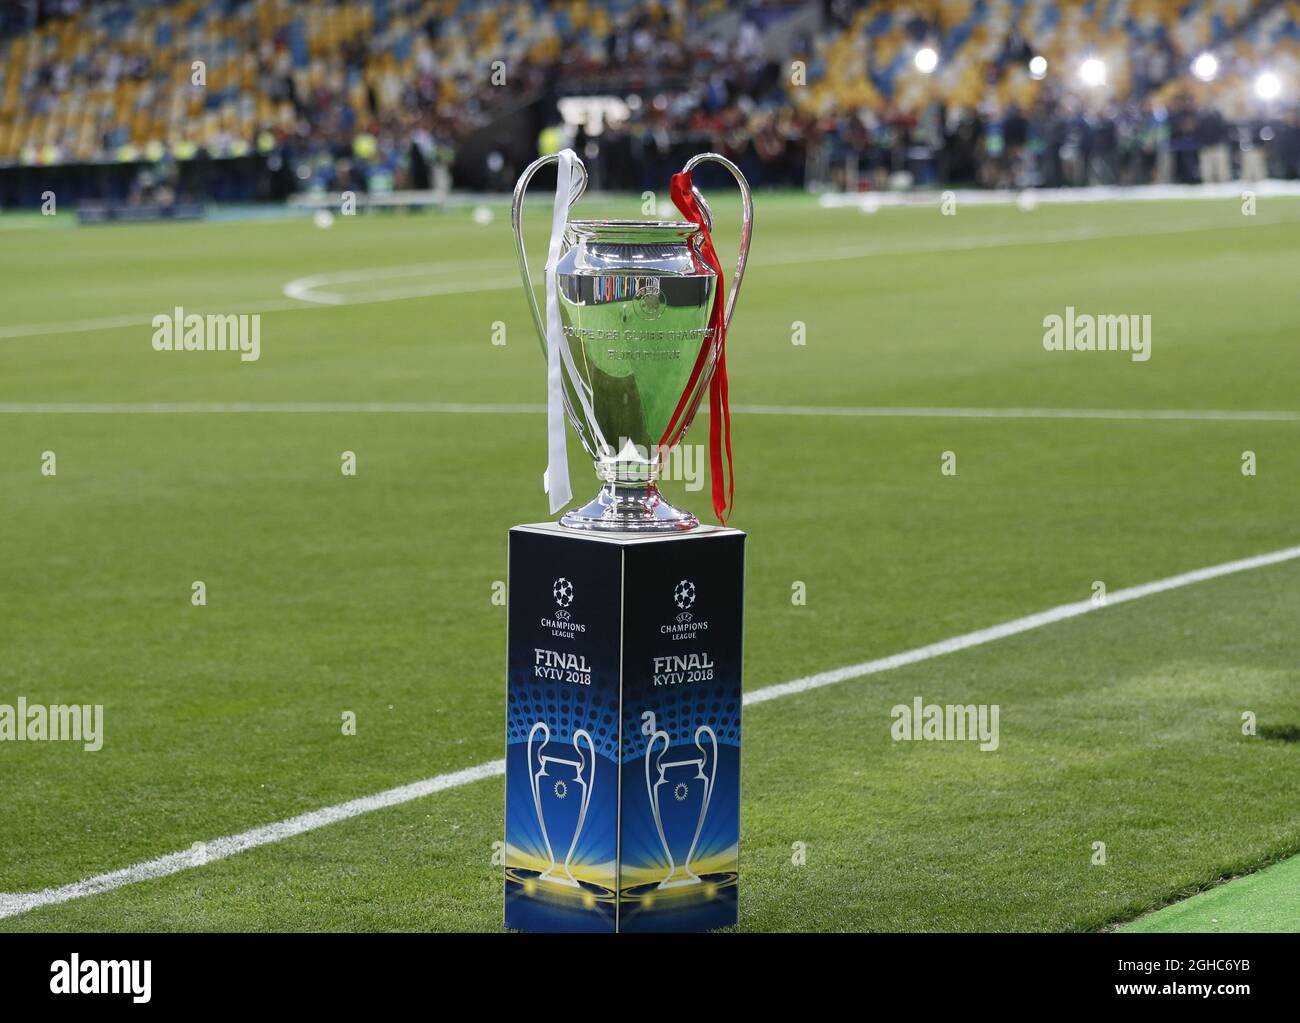 Uefa champions league cup -Fotos und -Bildmaterial in hoher Auflösung –  Alamy